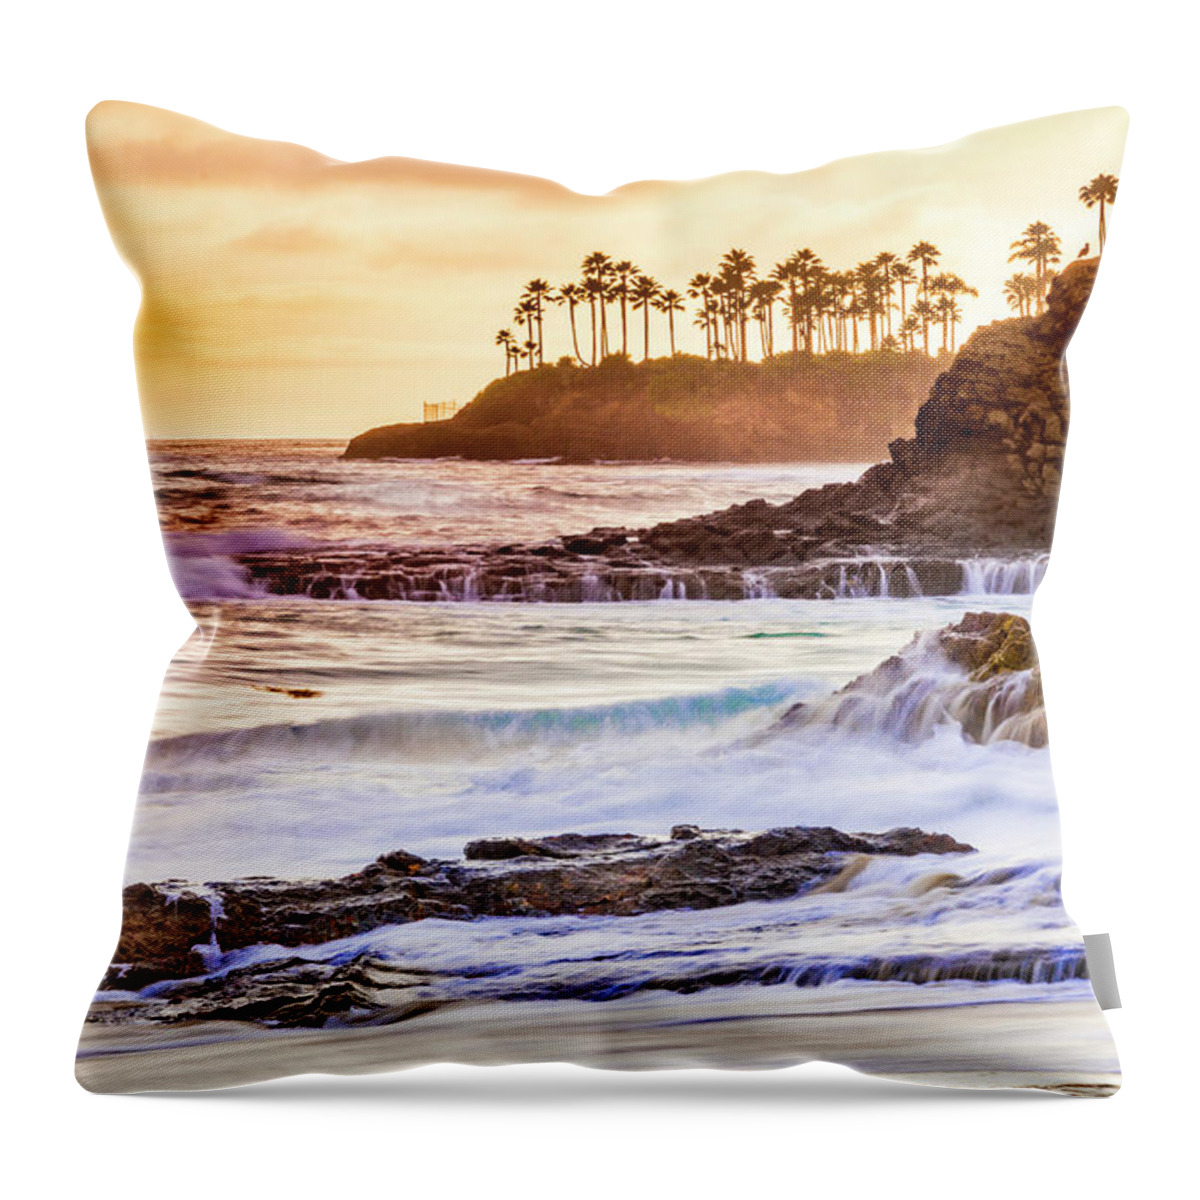 California Beaches Throw Pillow featuring the photograph Laguna Beach at Sunset by Donald Pash